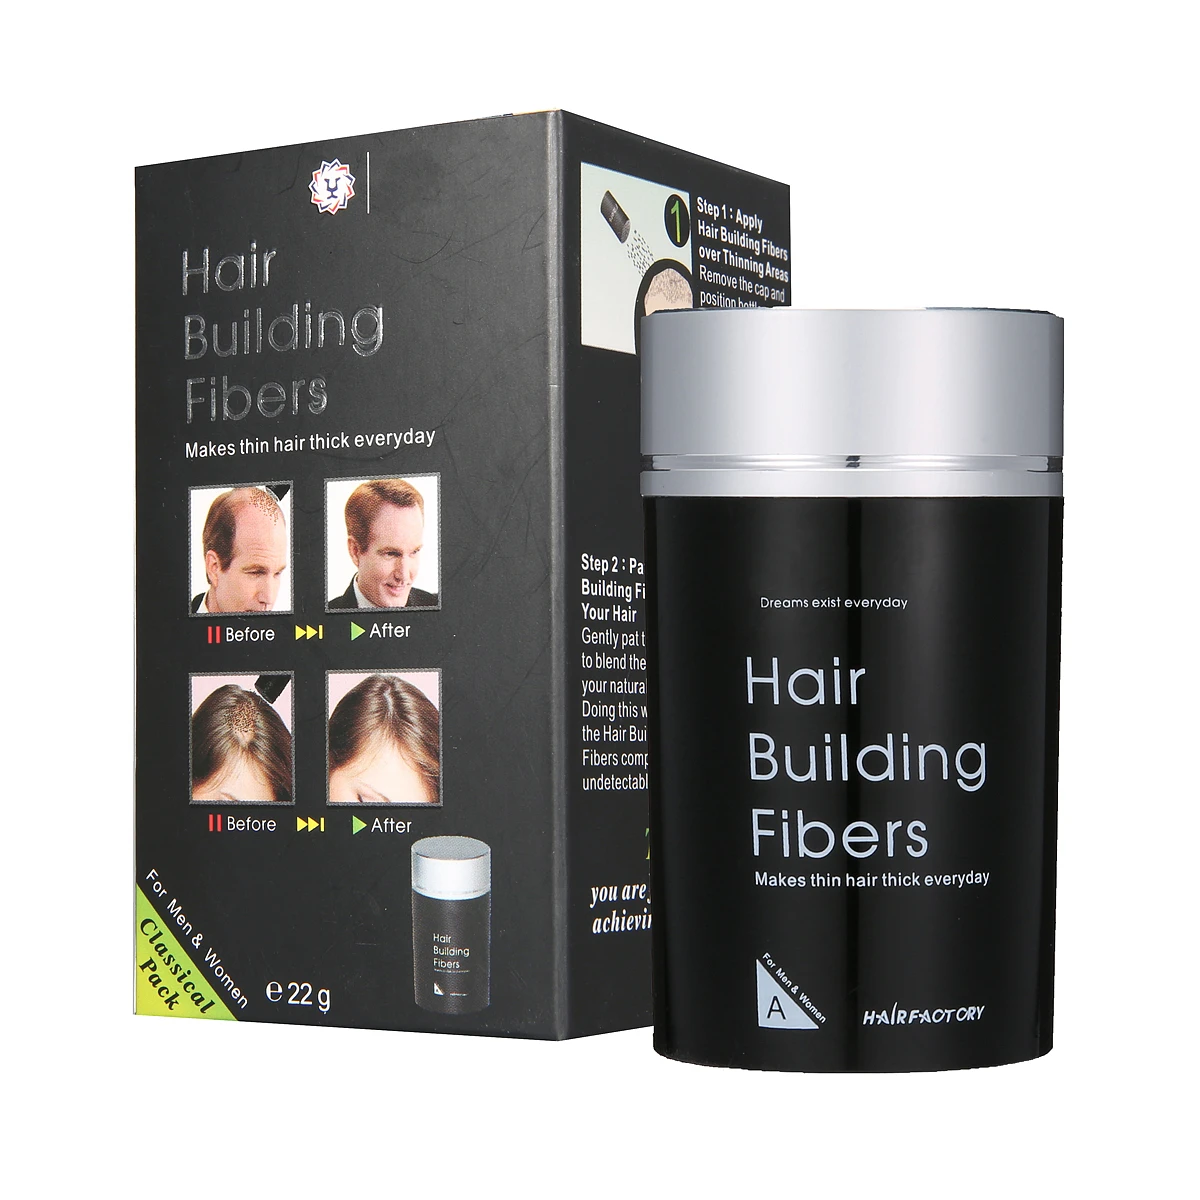 DEXE Hair Building Fibers Black Makes Hair Thick